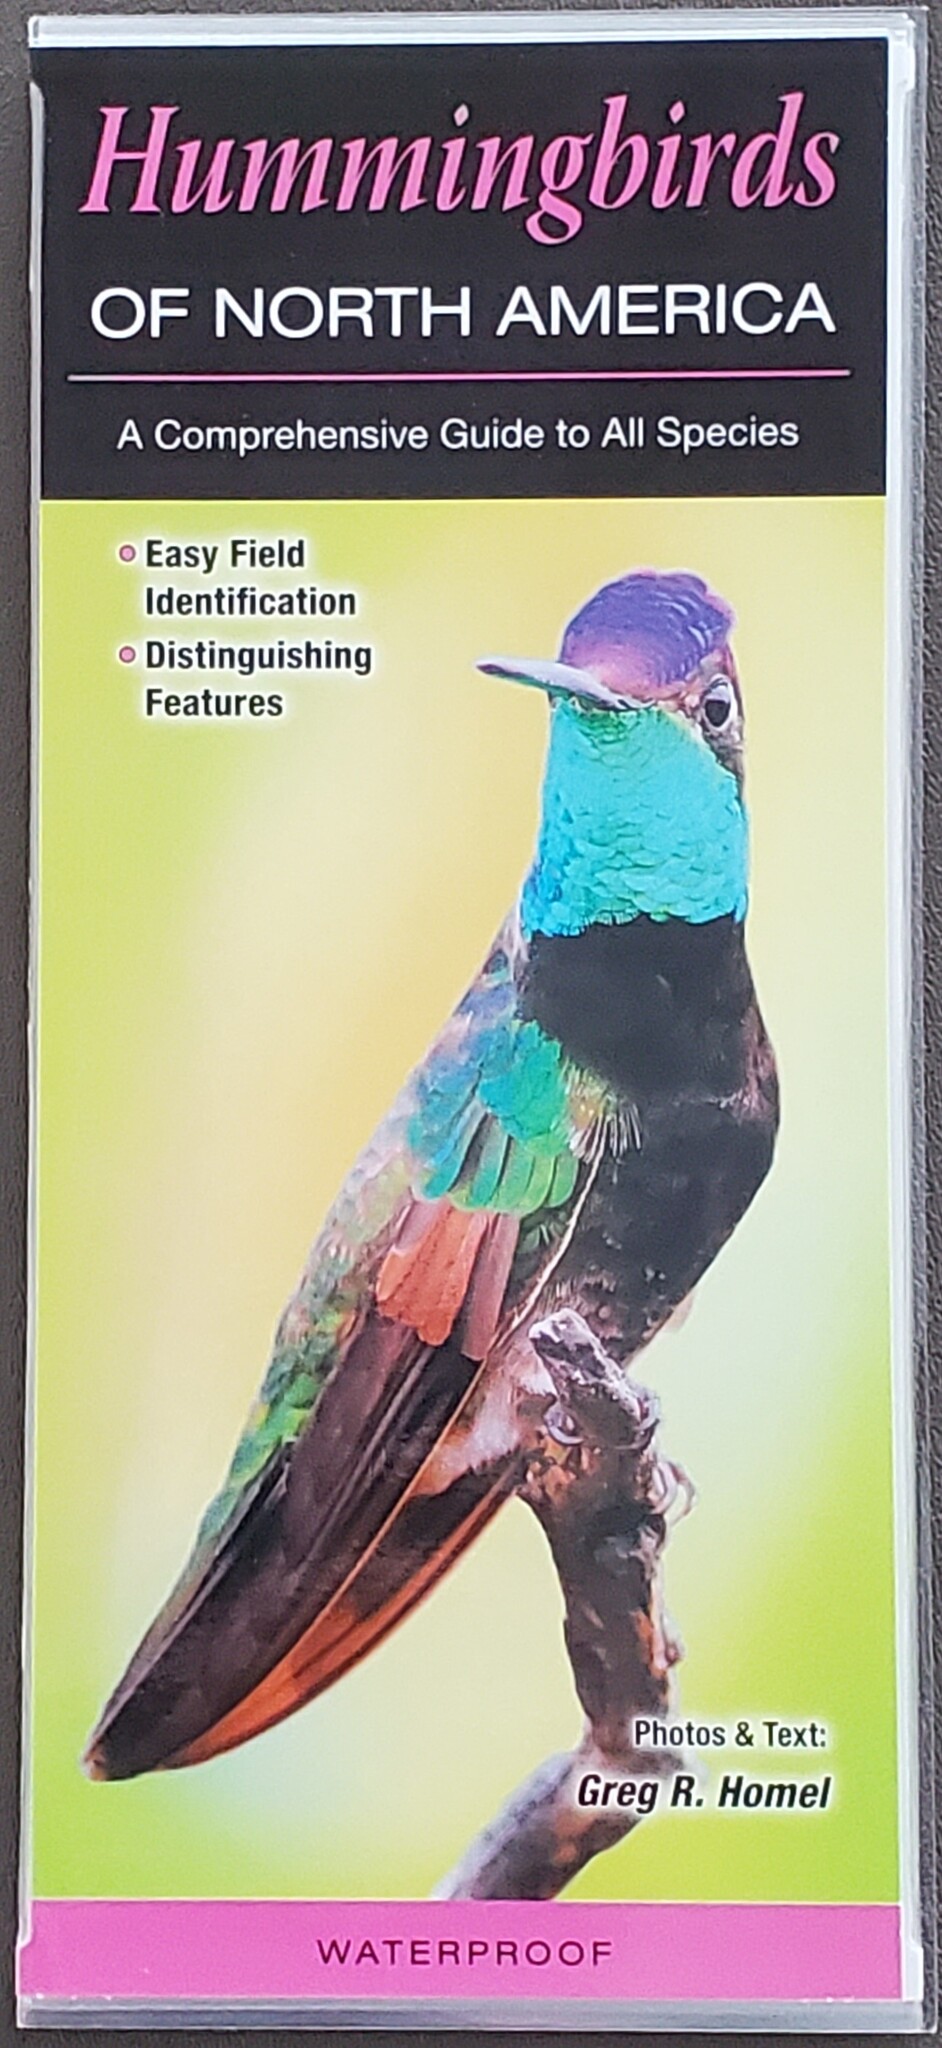 Hummingbirds of NA foldout